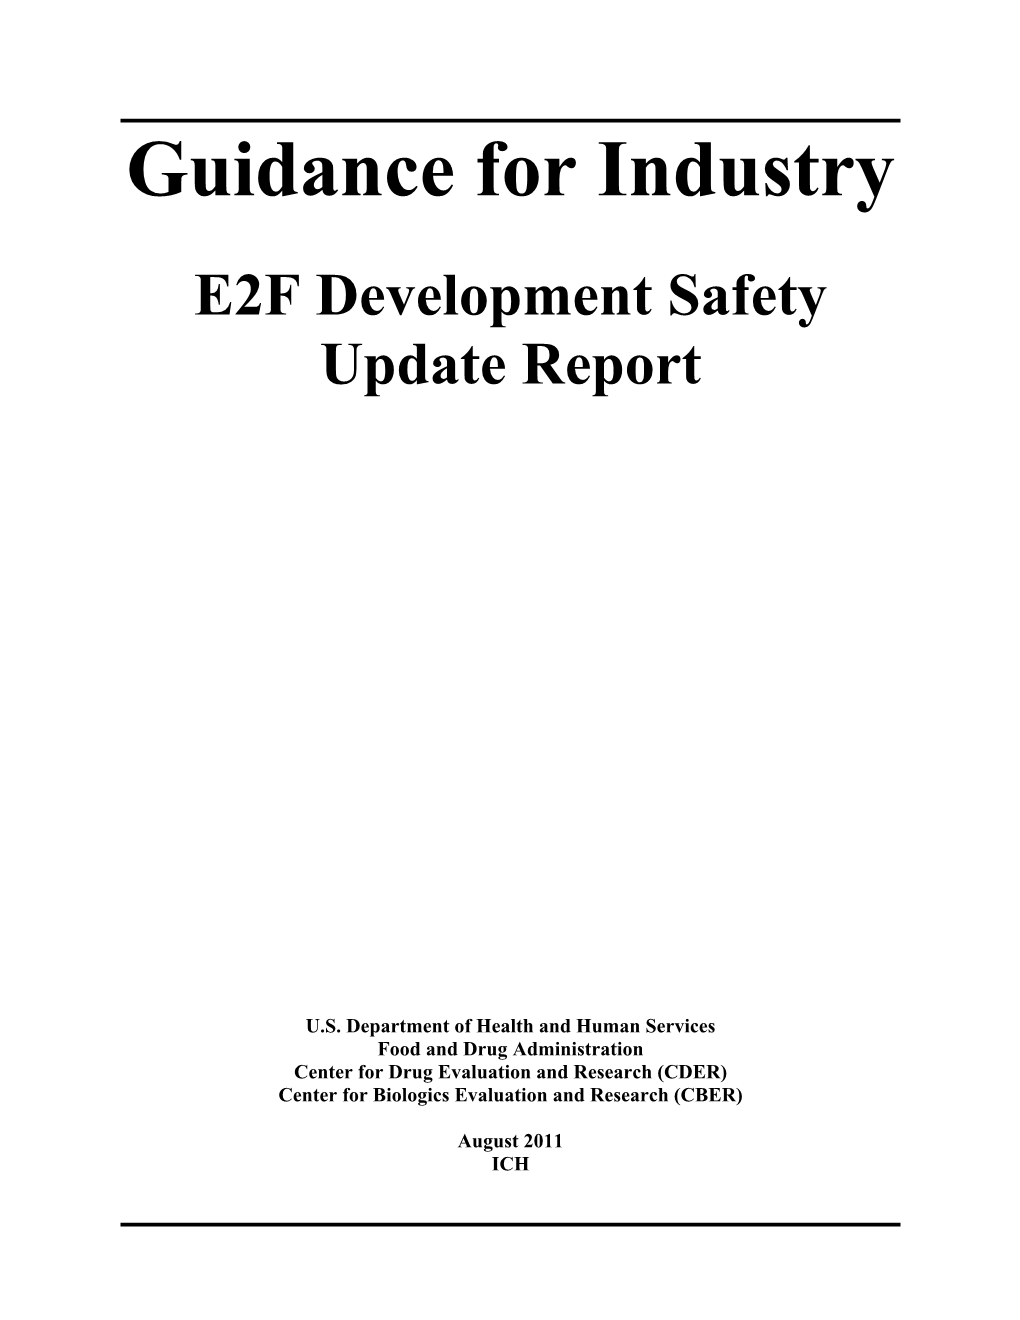 E2F Development Safety Update Report